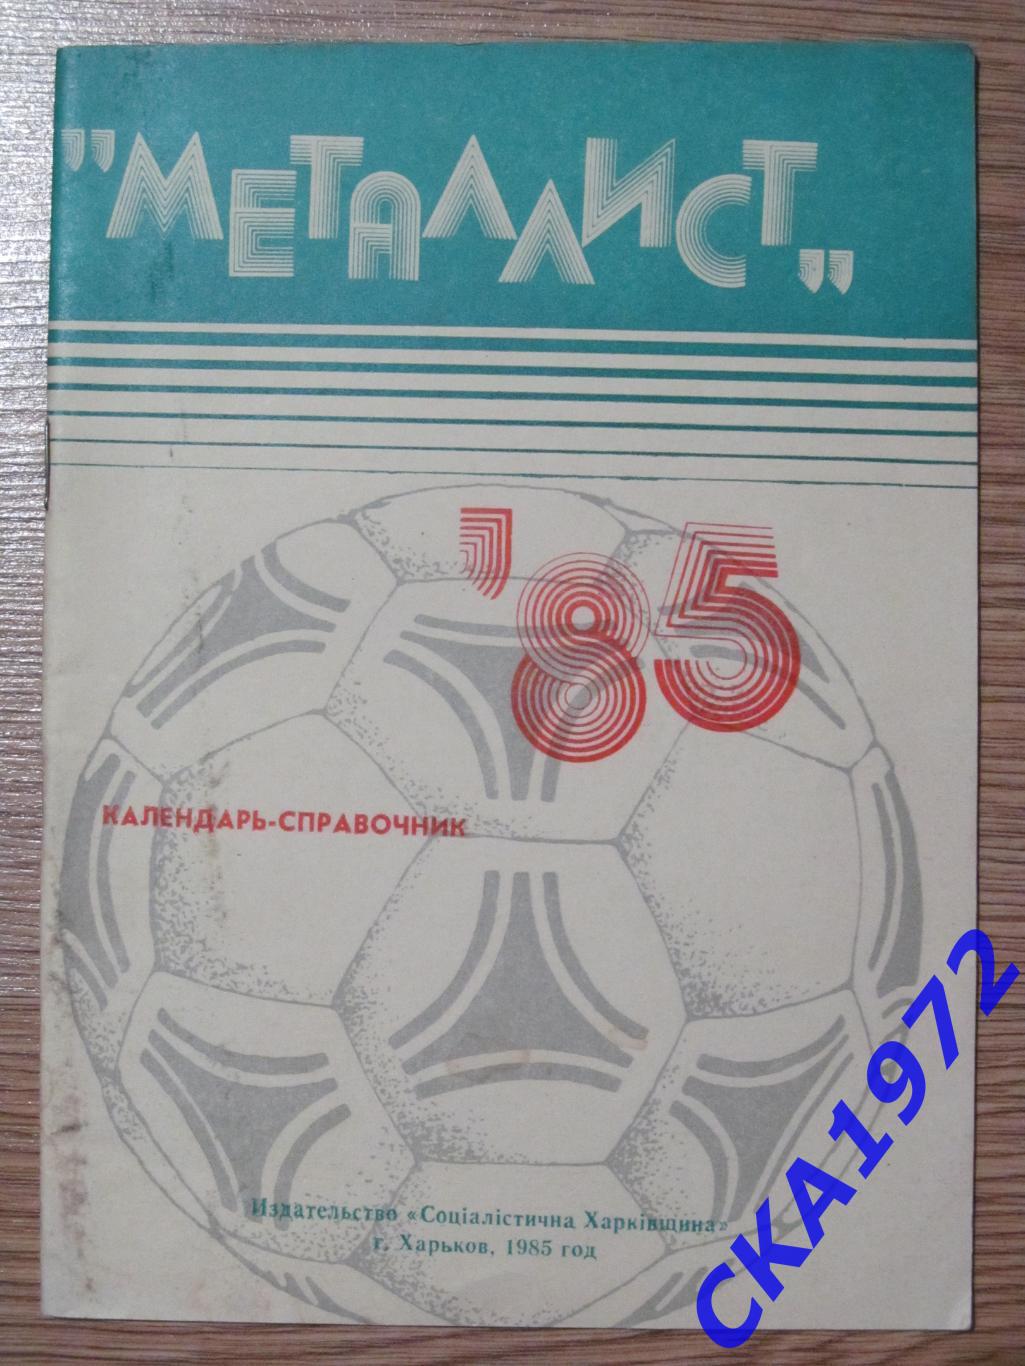 календарь-справочник Металлист Харьков 1985